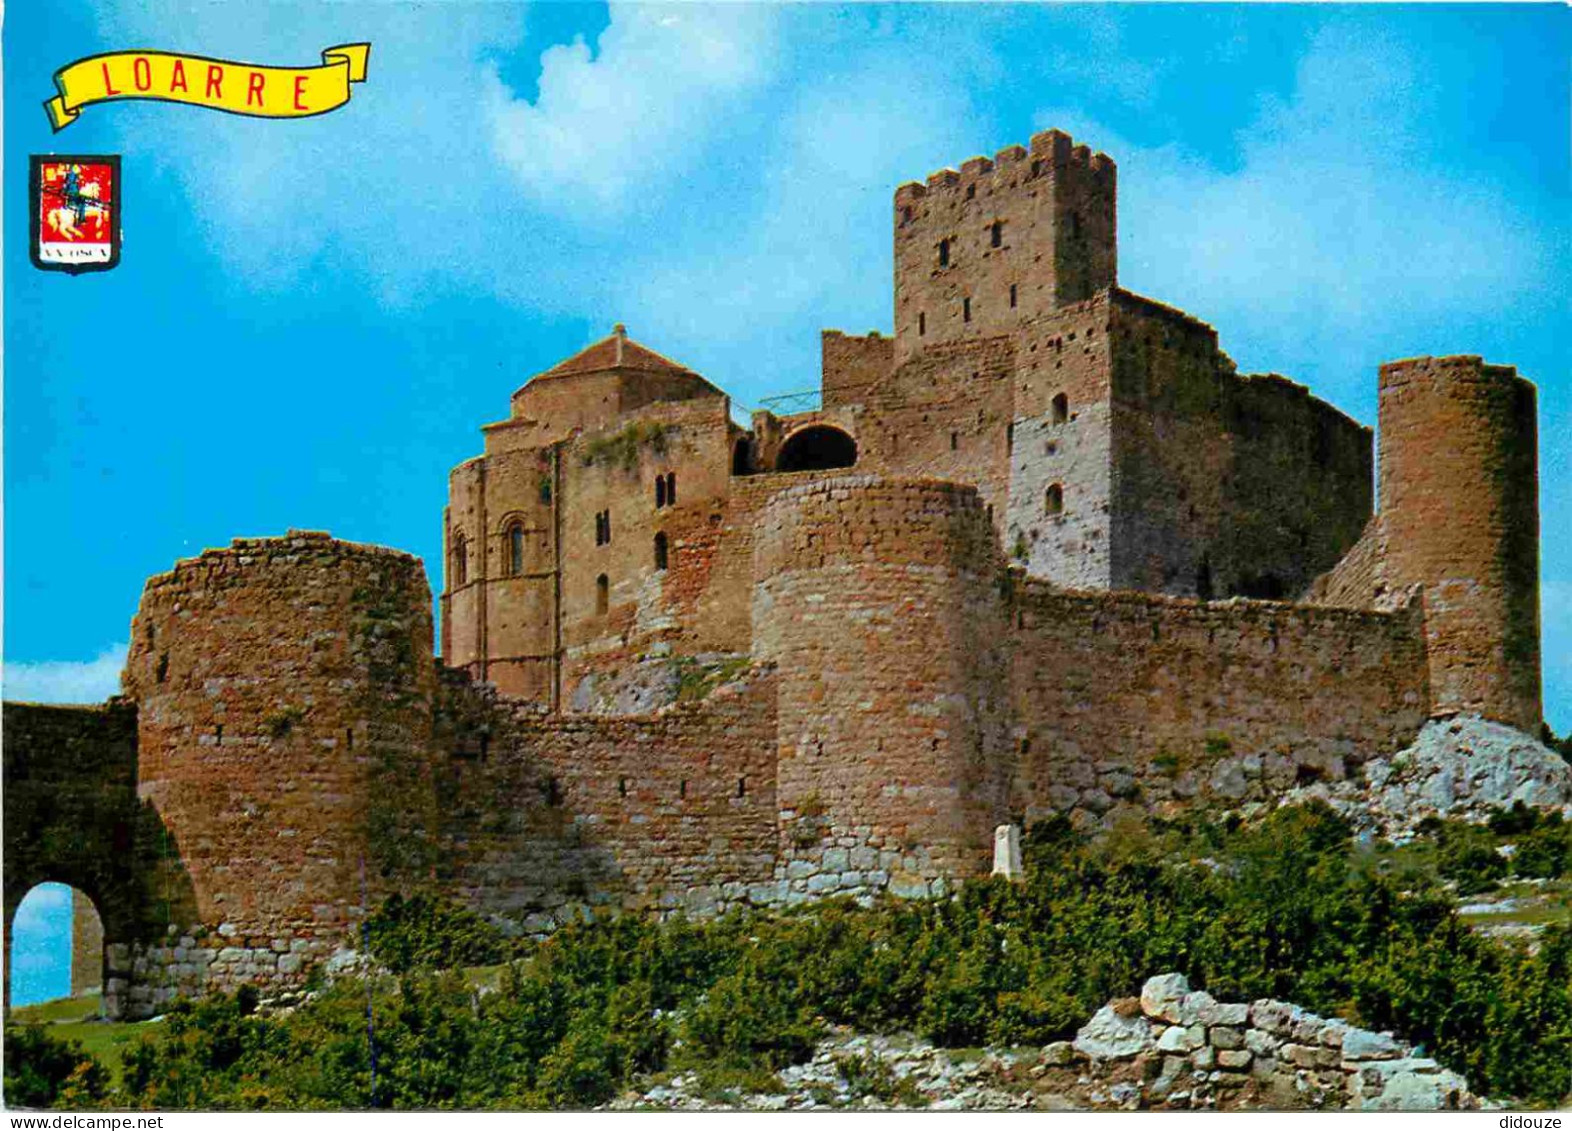 Espagne - Espana - Aragon - Huesca - Alto Aragon - Loarre - Castillo Romenico Siglo XI - Lado De Levante Y Entrada Princ - Huesca